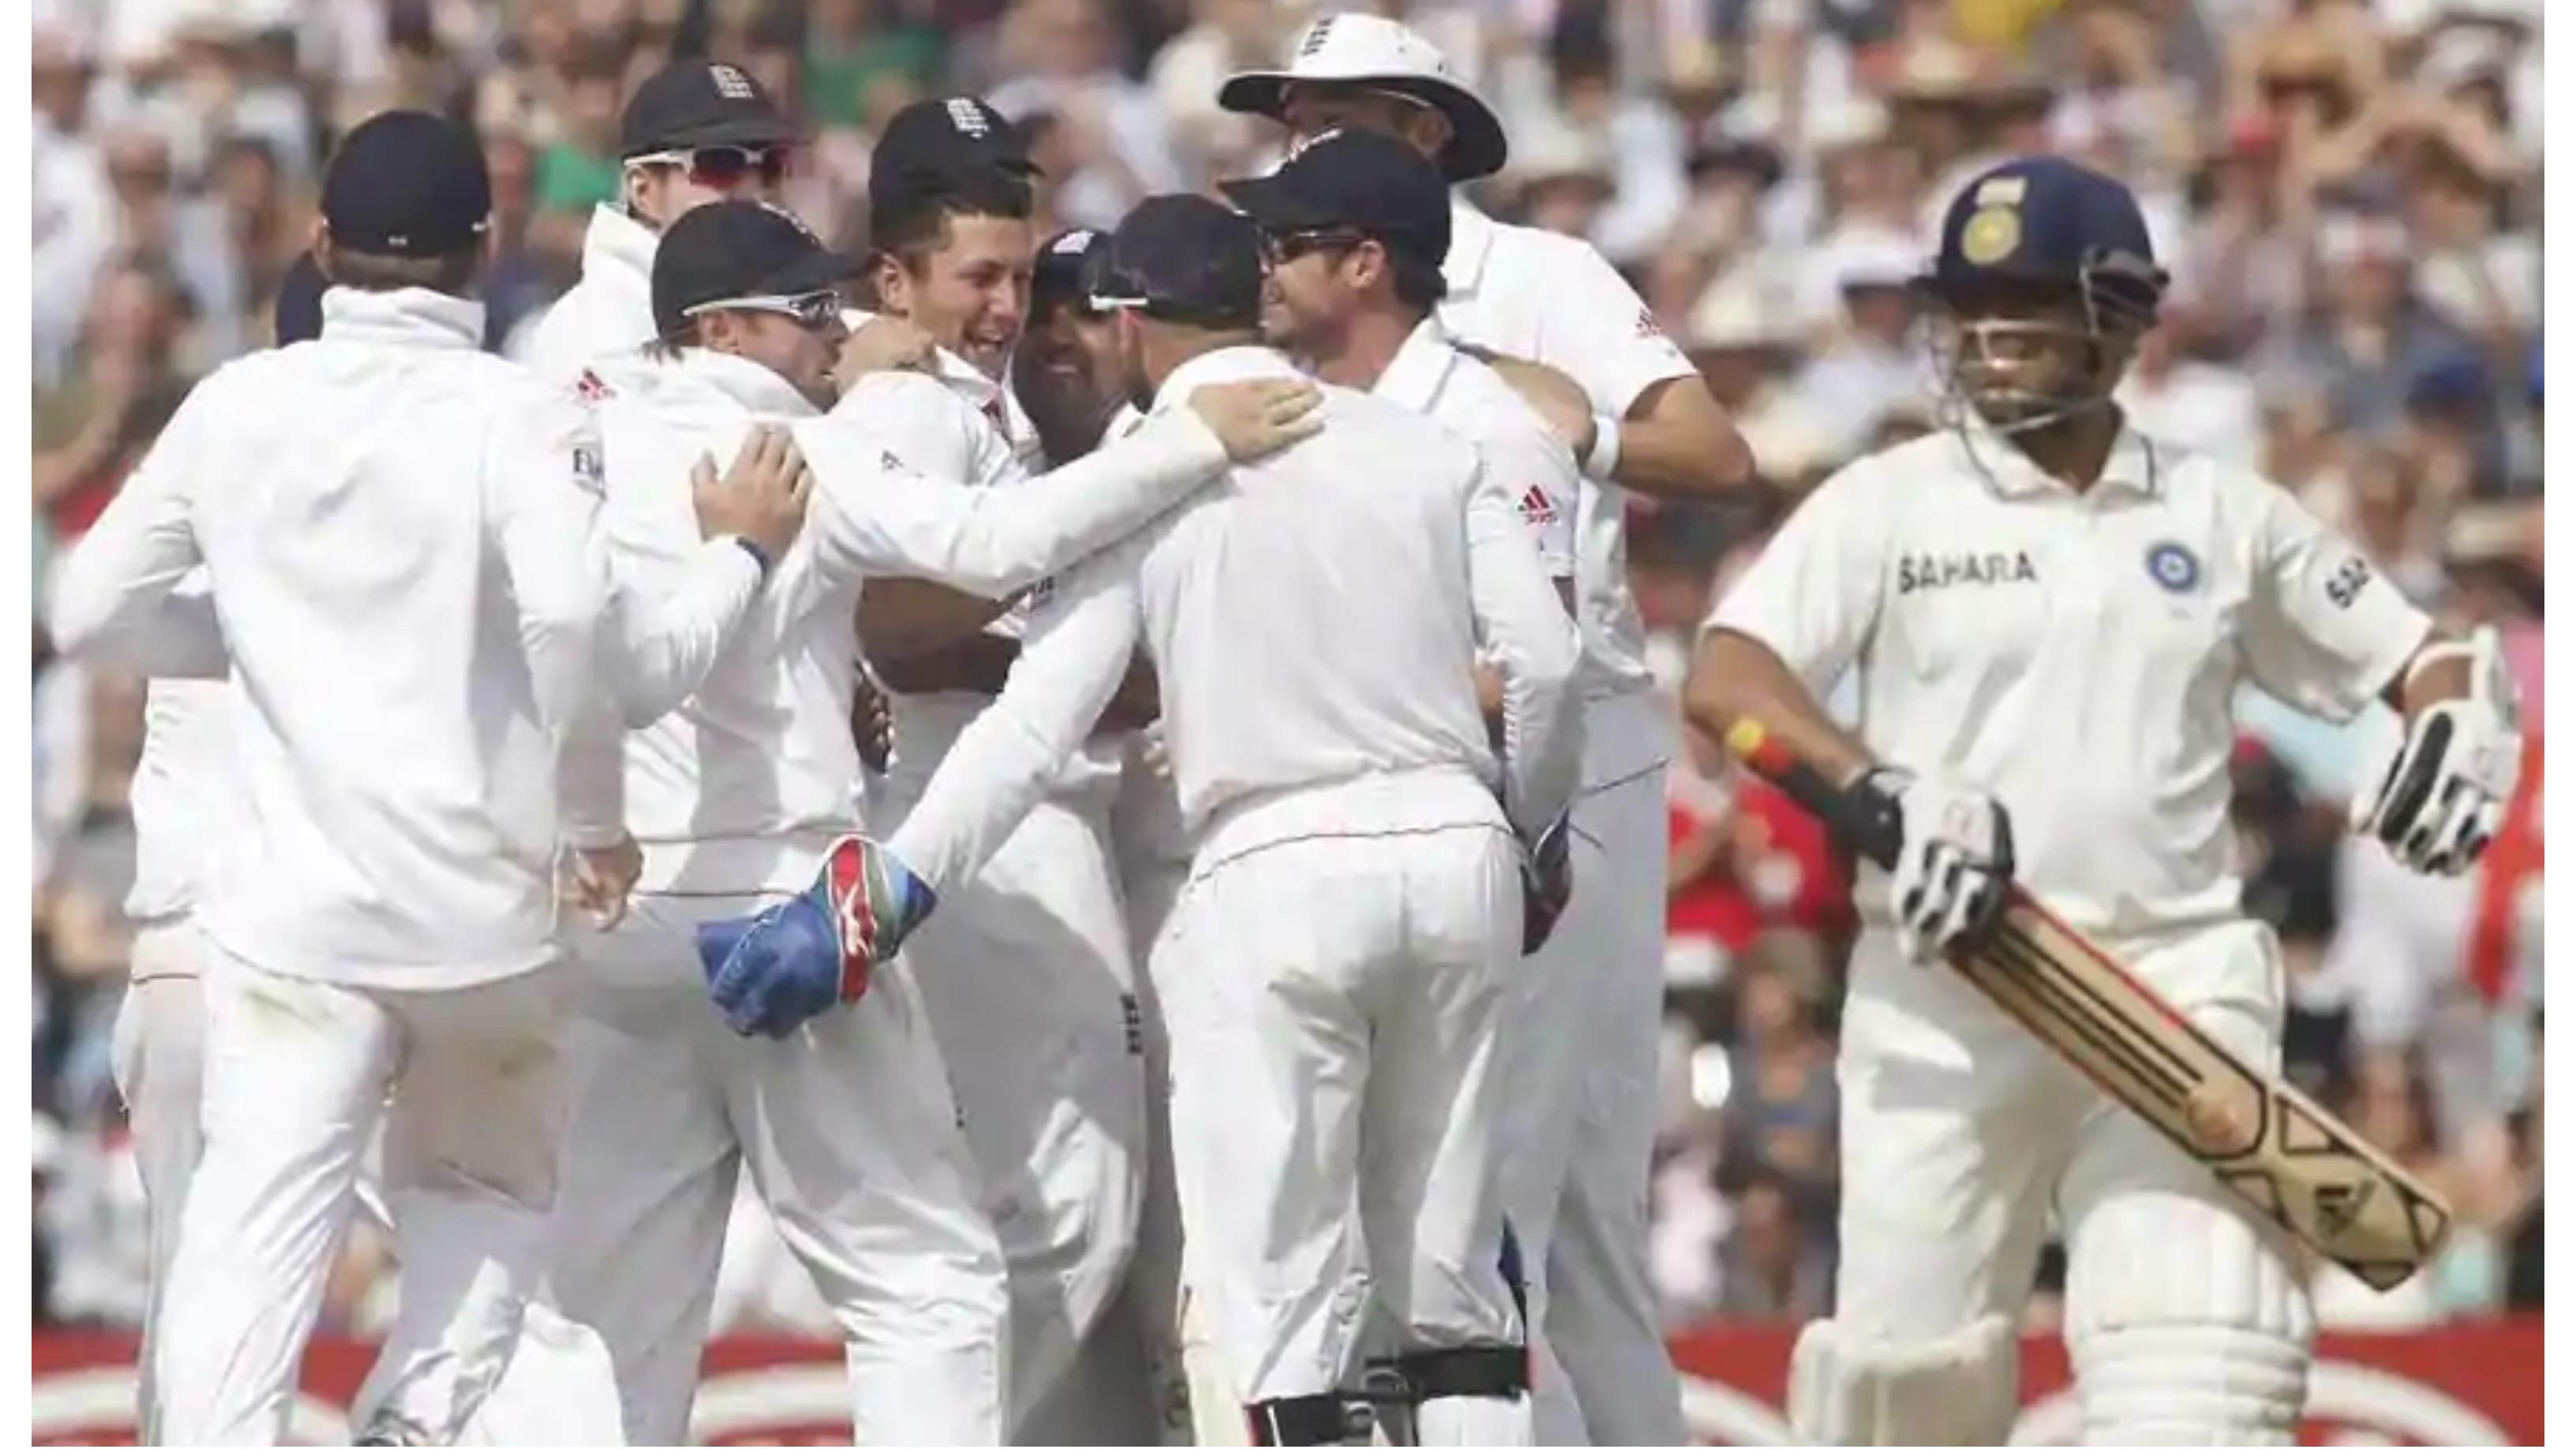 Received death threats after dismissing Sachin Tendulkar in 2011 Oval Test: Tim Bresnan